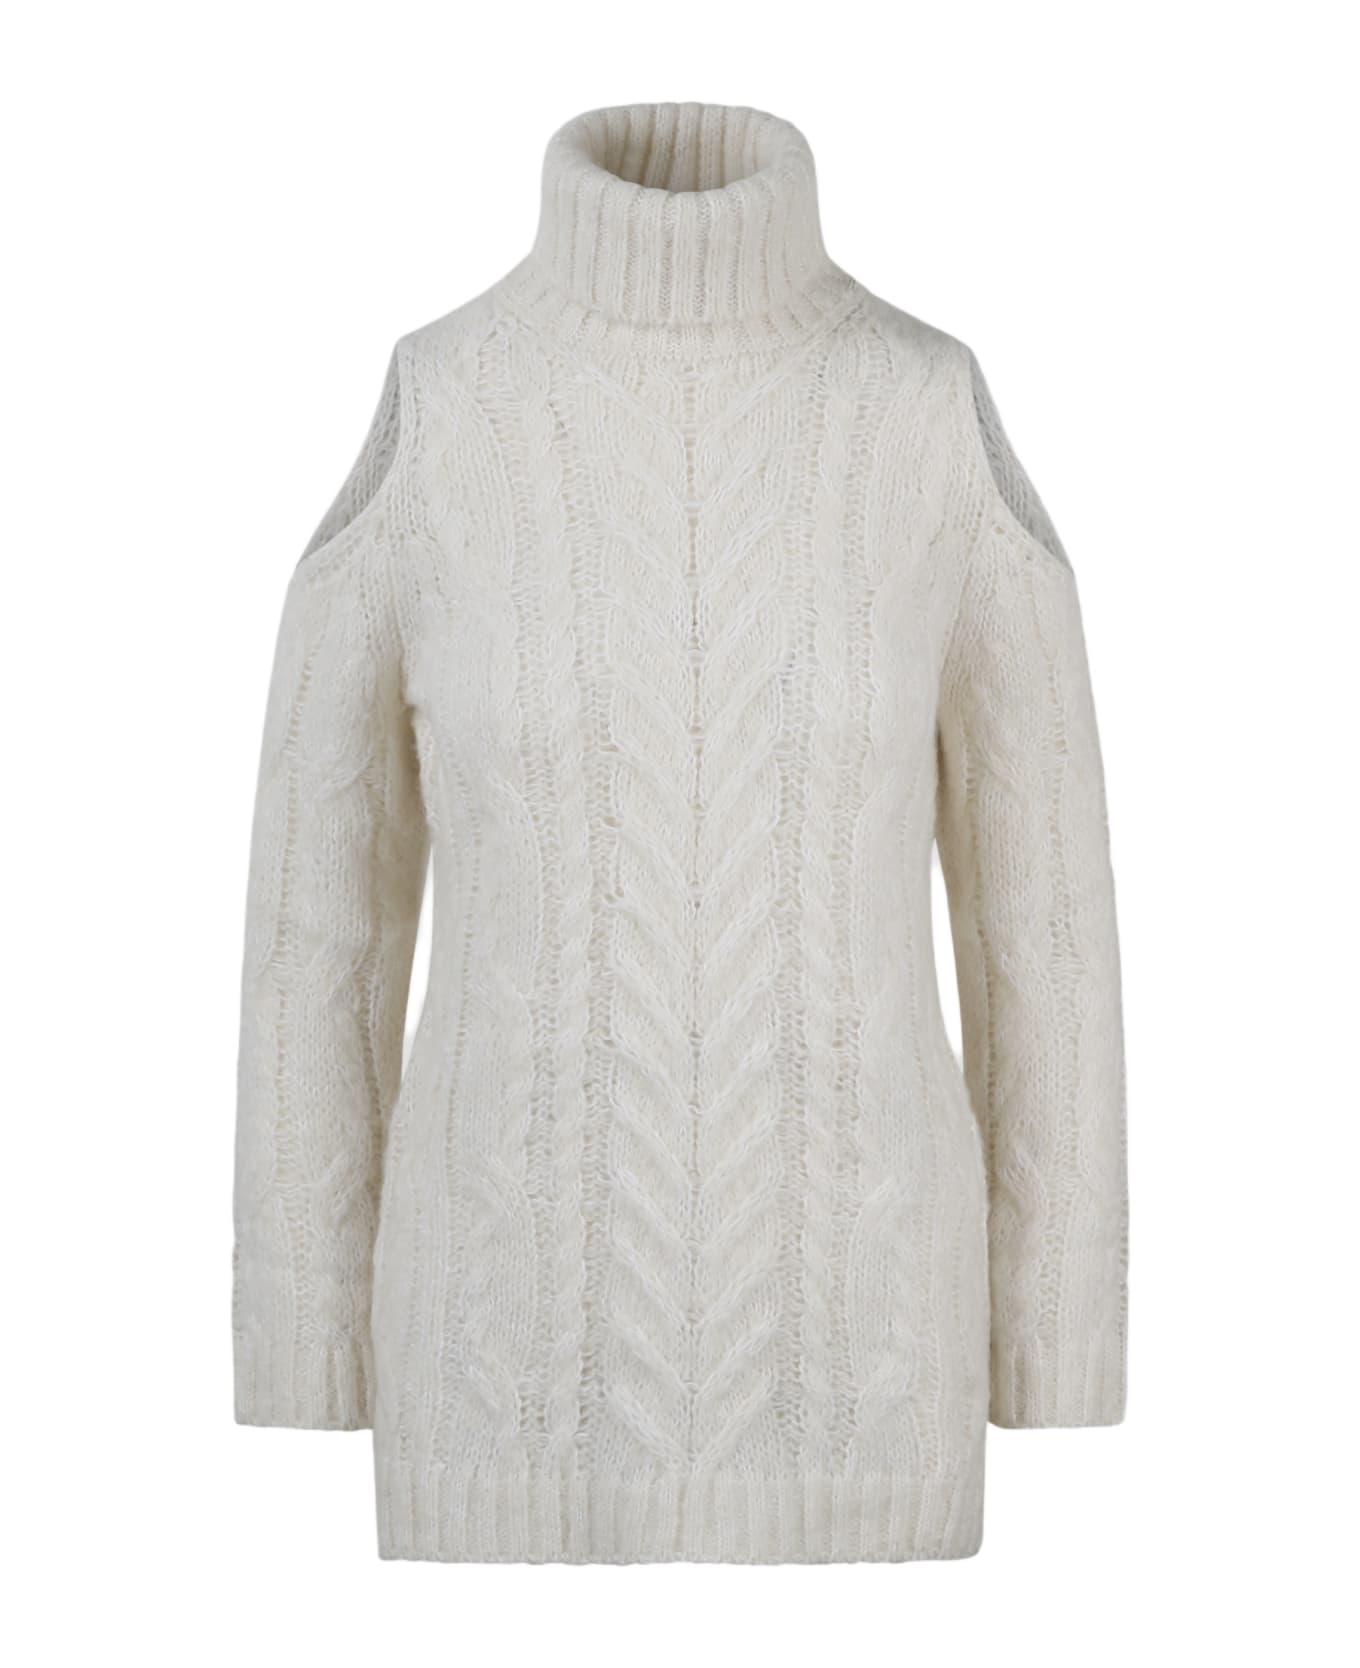 Parosh Alpaca Cable Sweater - White